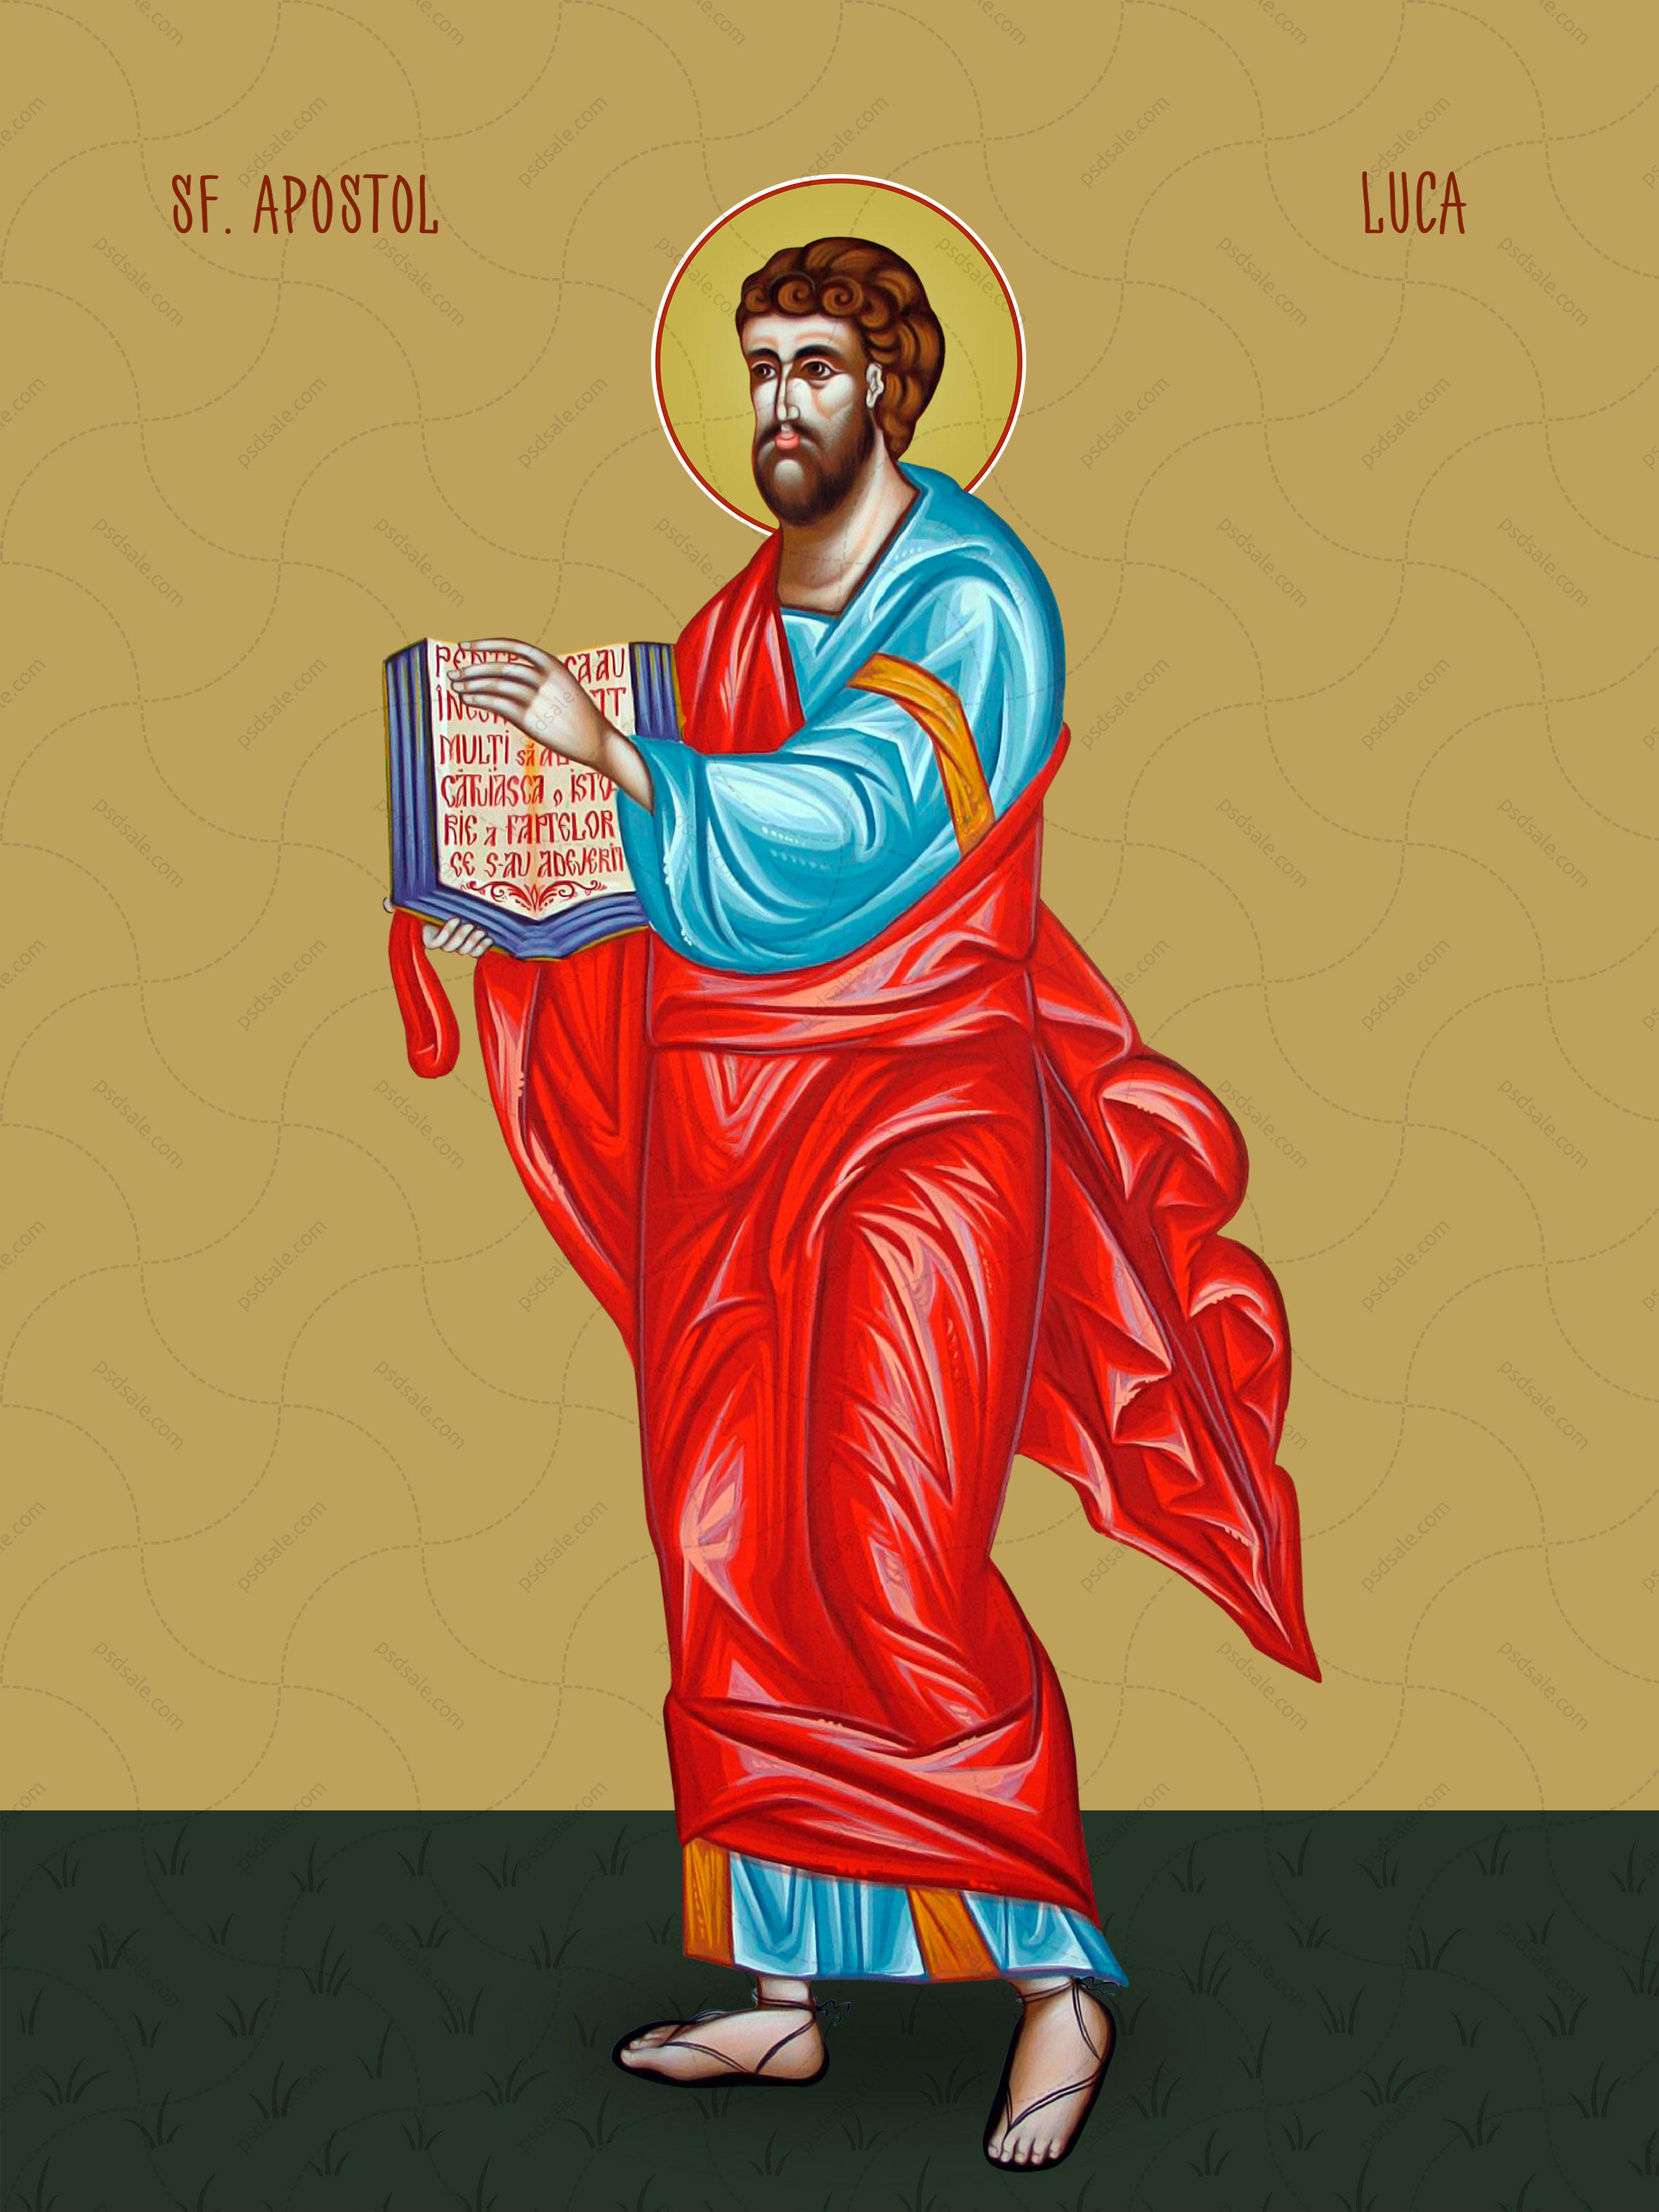 Luke, the apostle